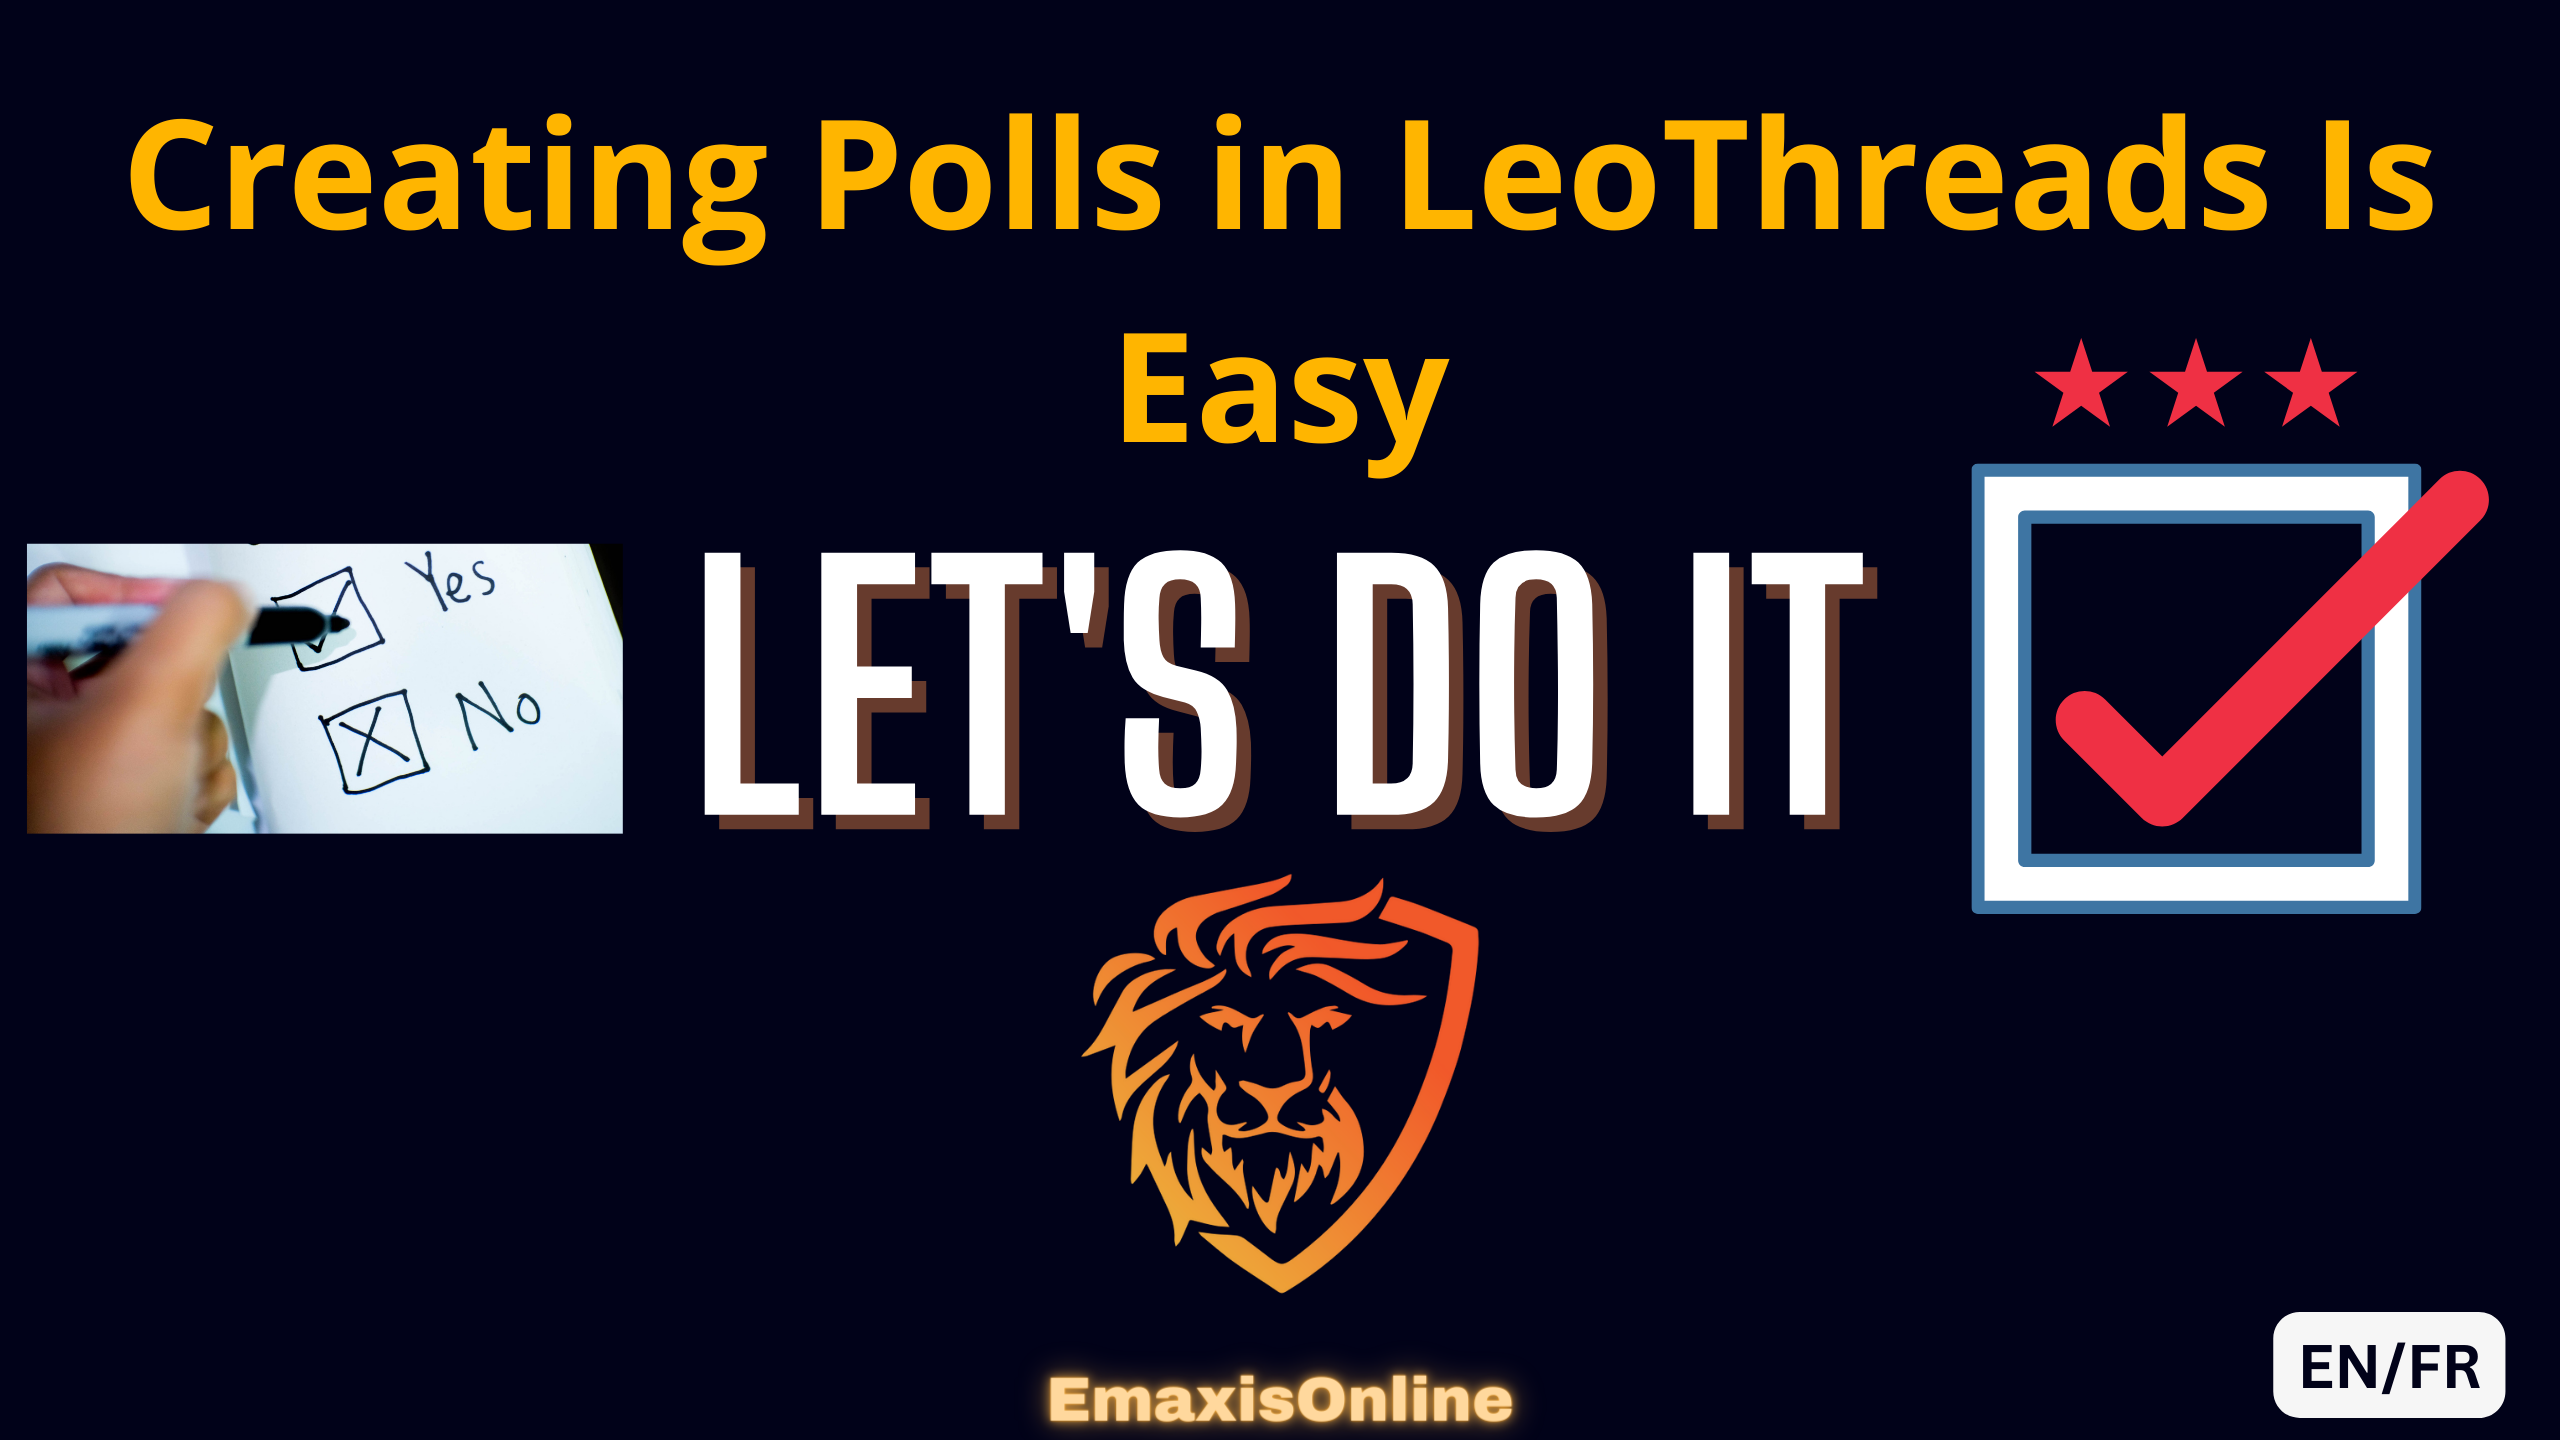 @emaxisonline/creating-polls-in-leothreads-is-easy-let-s-do-it-en-fr